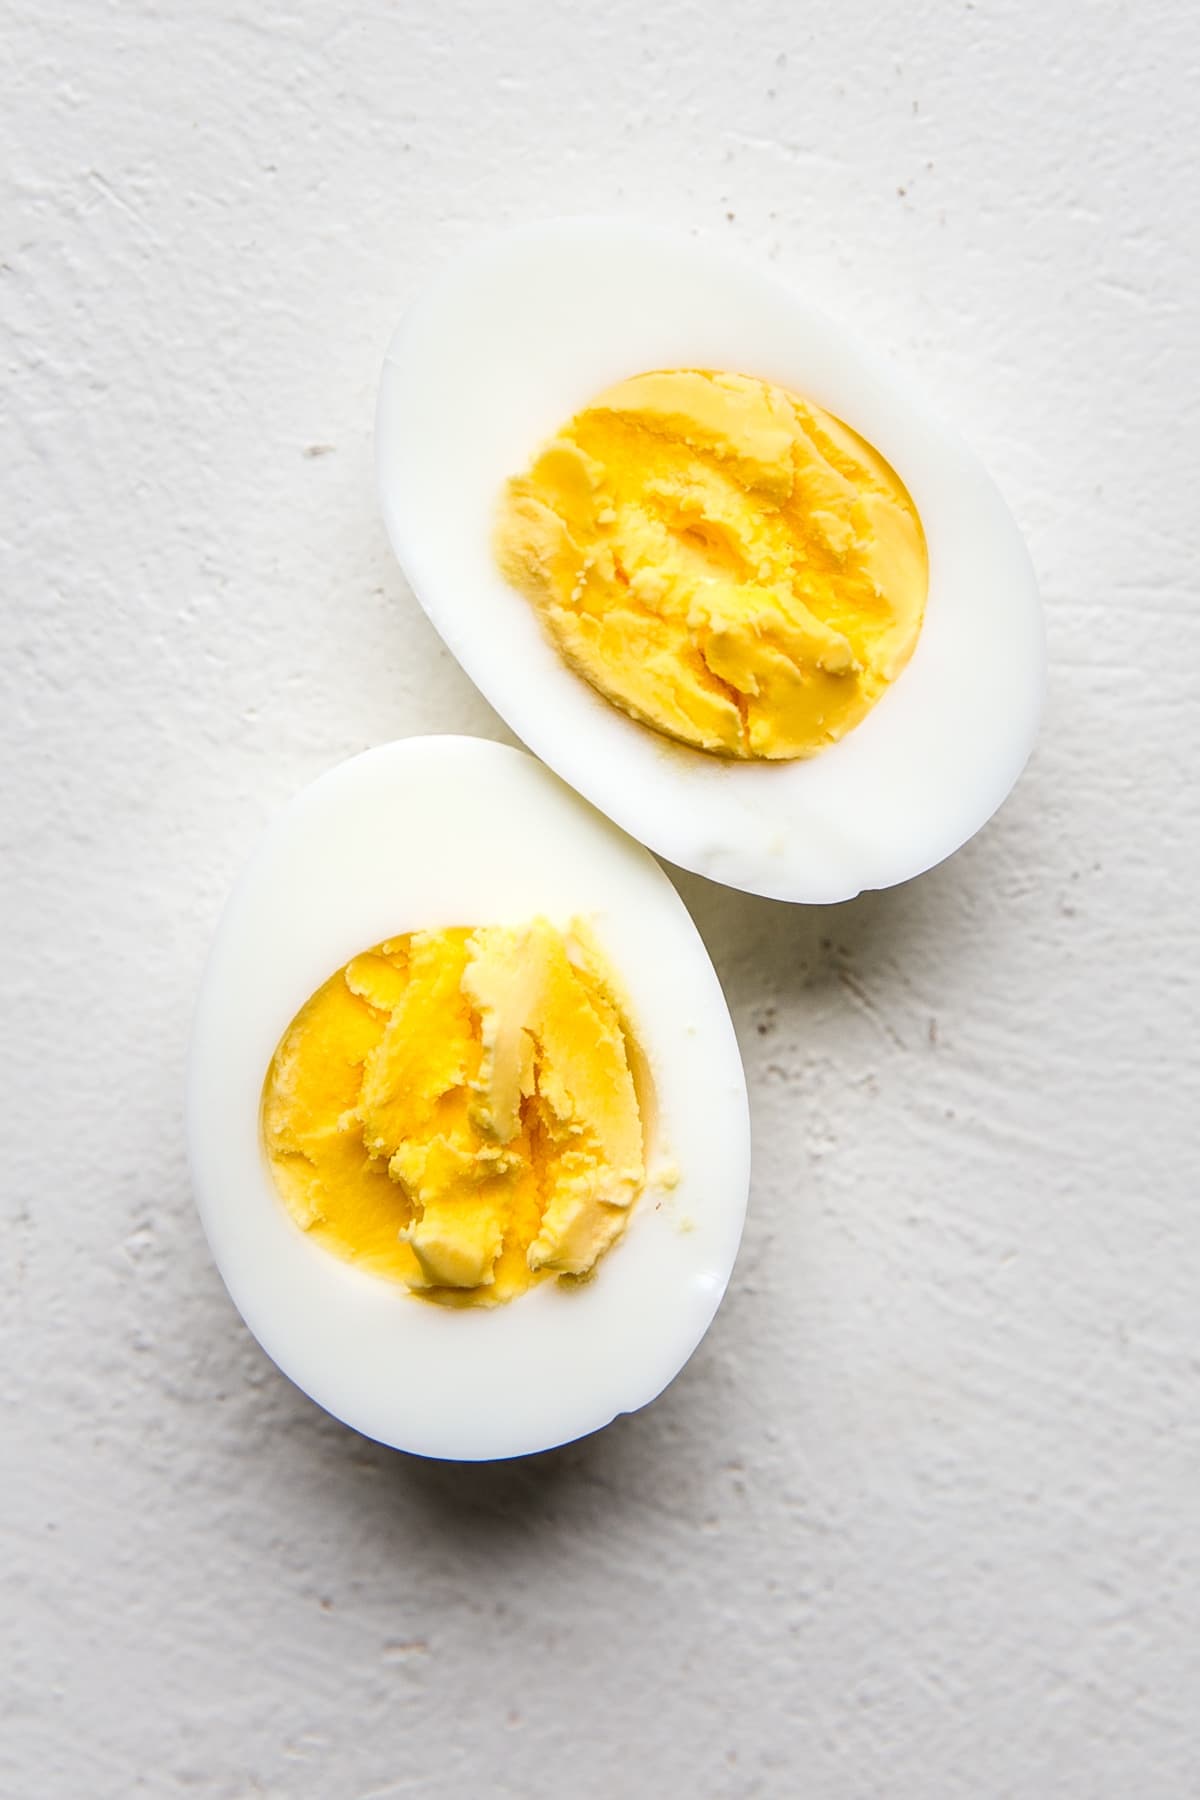 How To Make Hard Boiled Eggs The Modern Proper